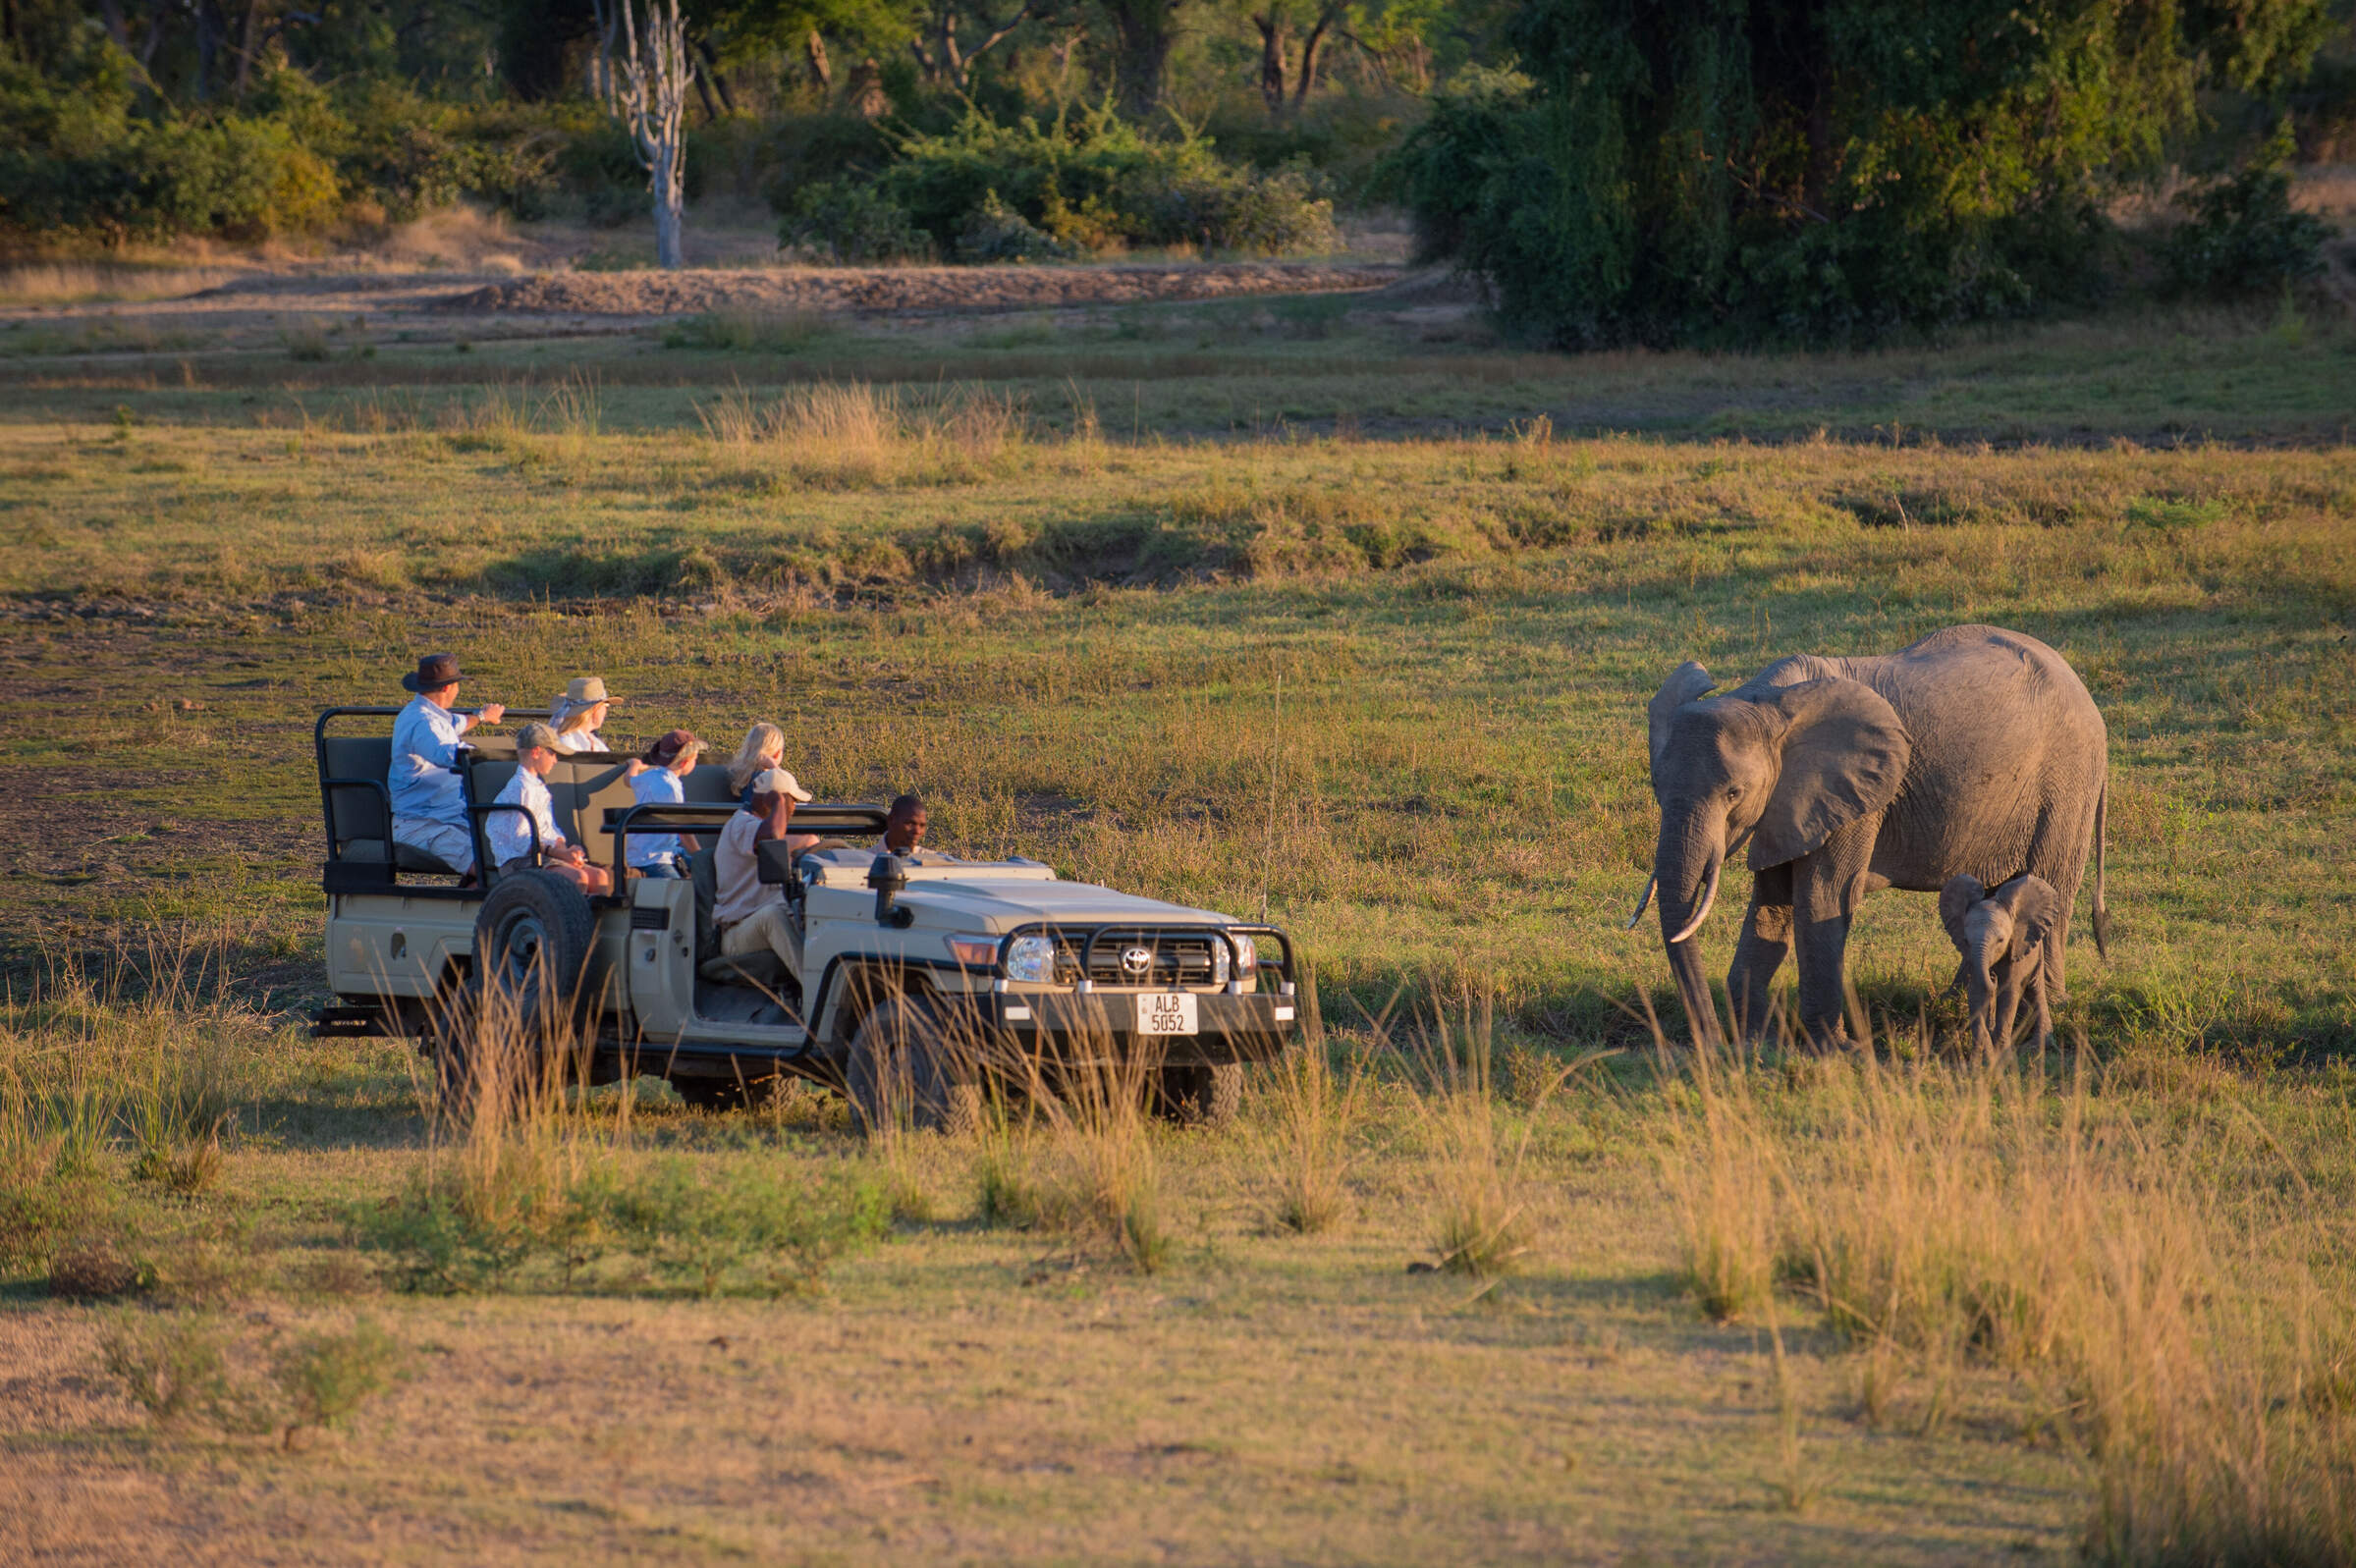 zambia safari holidays